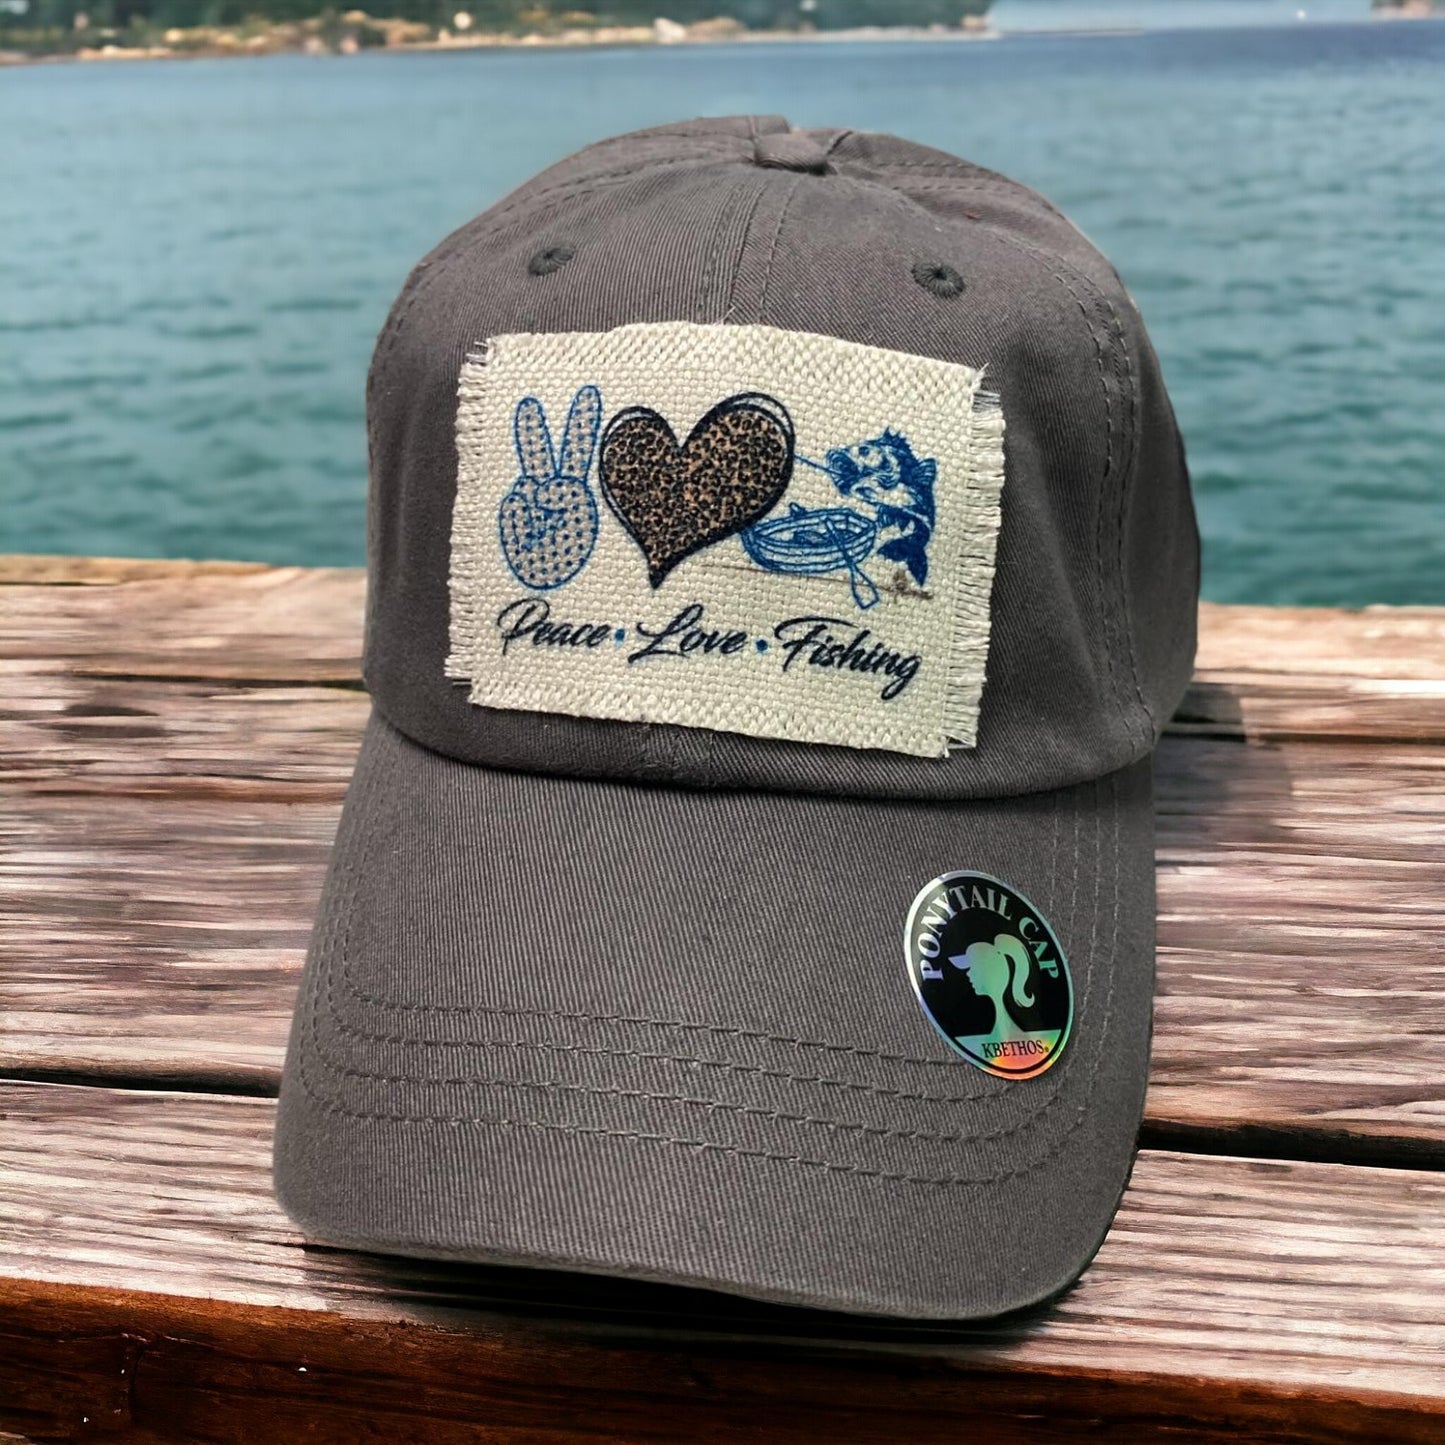 Cotton Ponytail Ballcap - Peace Love Fishing